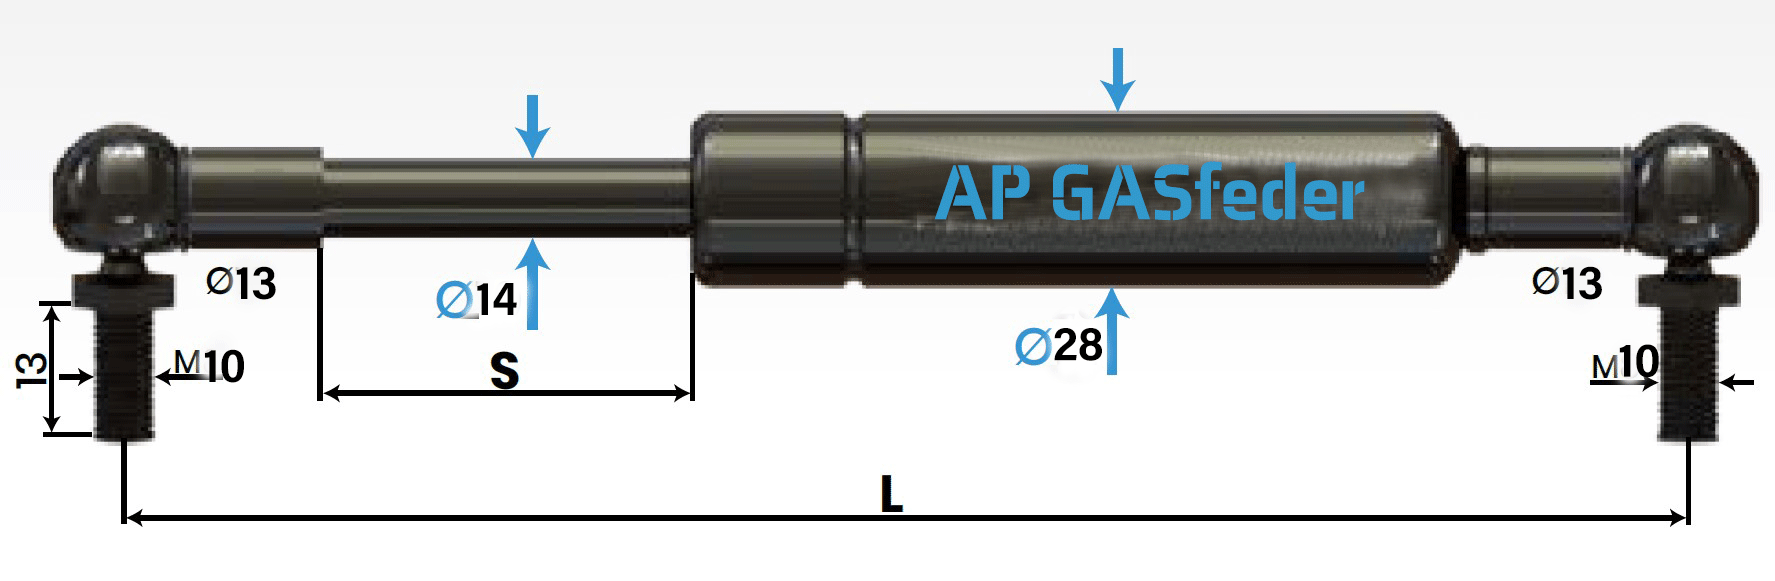 Imagen de AP GASfeder 1500N, 14/28, Hub(S): 300 mm, Länge (L): 735 mm,  Alternatvie SRST.2375LO